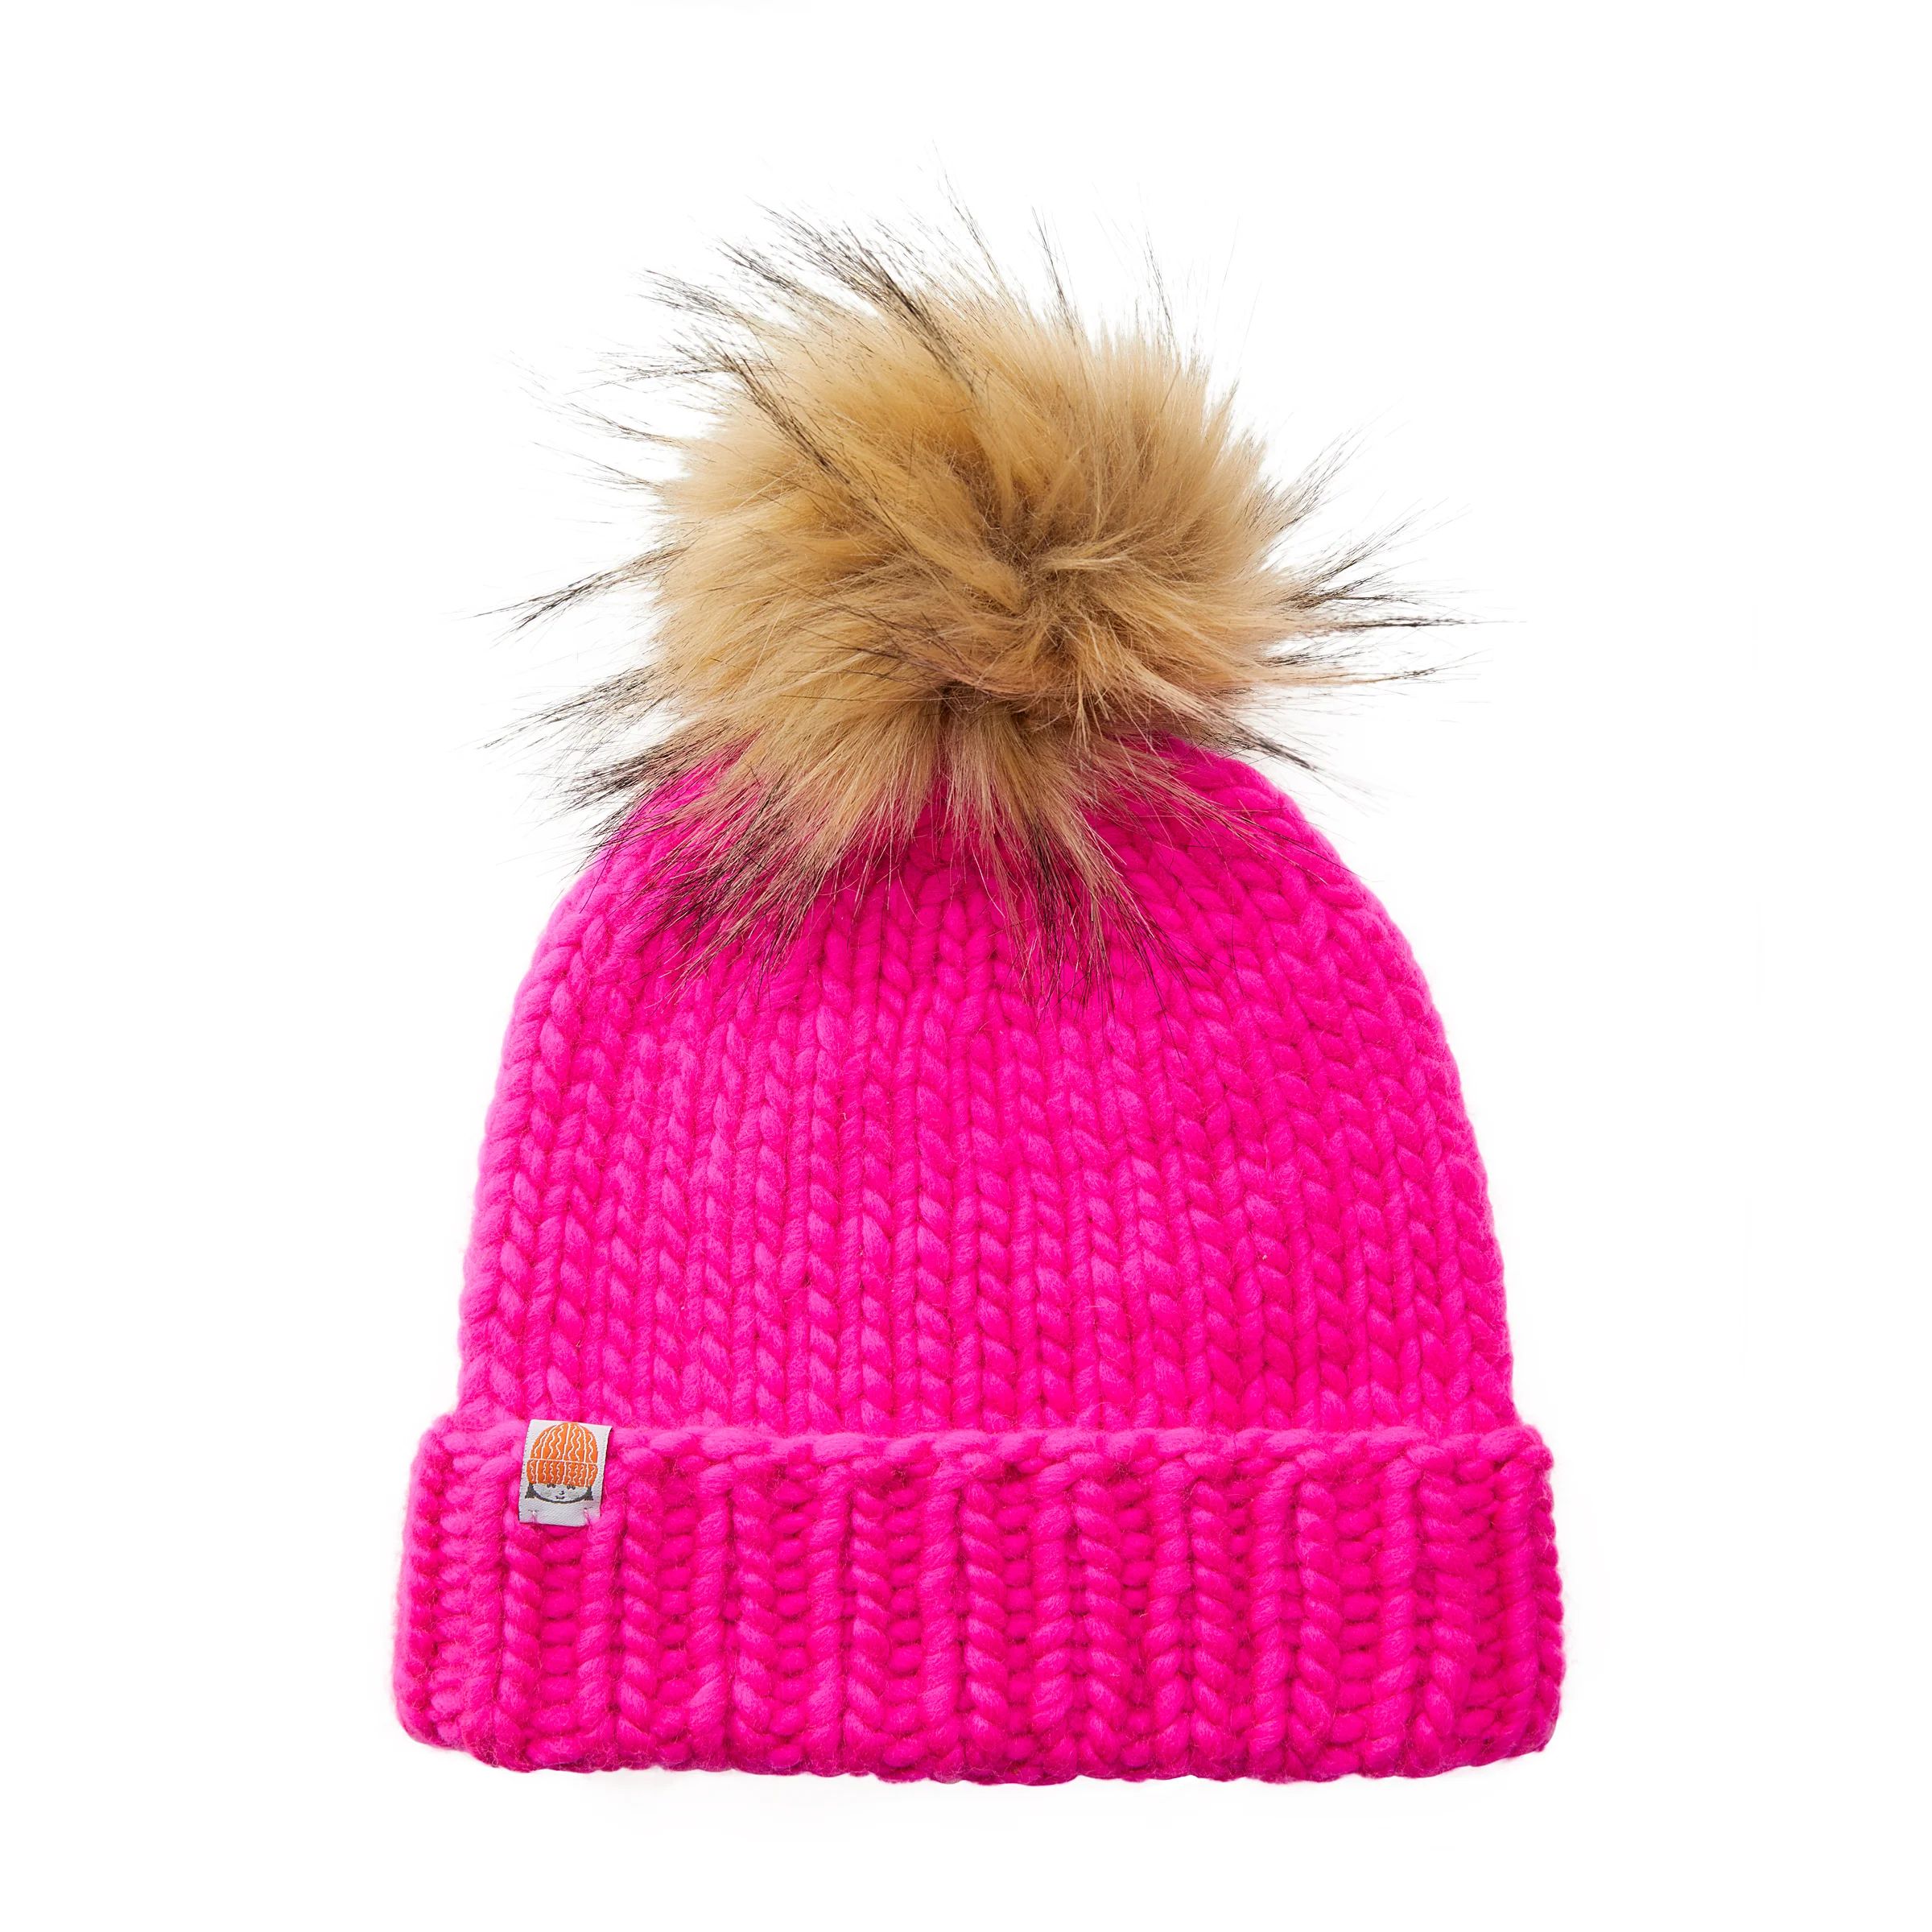 Shop The Rutherford Beanie | Merino Wool Hats | Sh*t That I Knit | Sh*t That I Knit